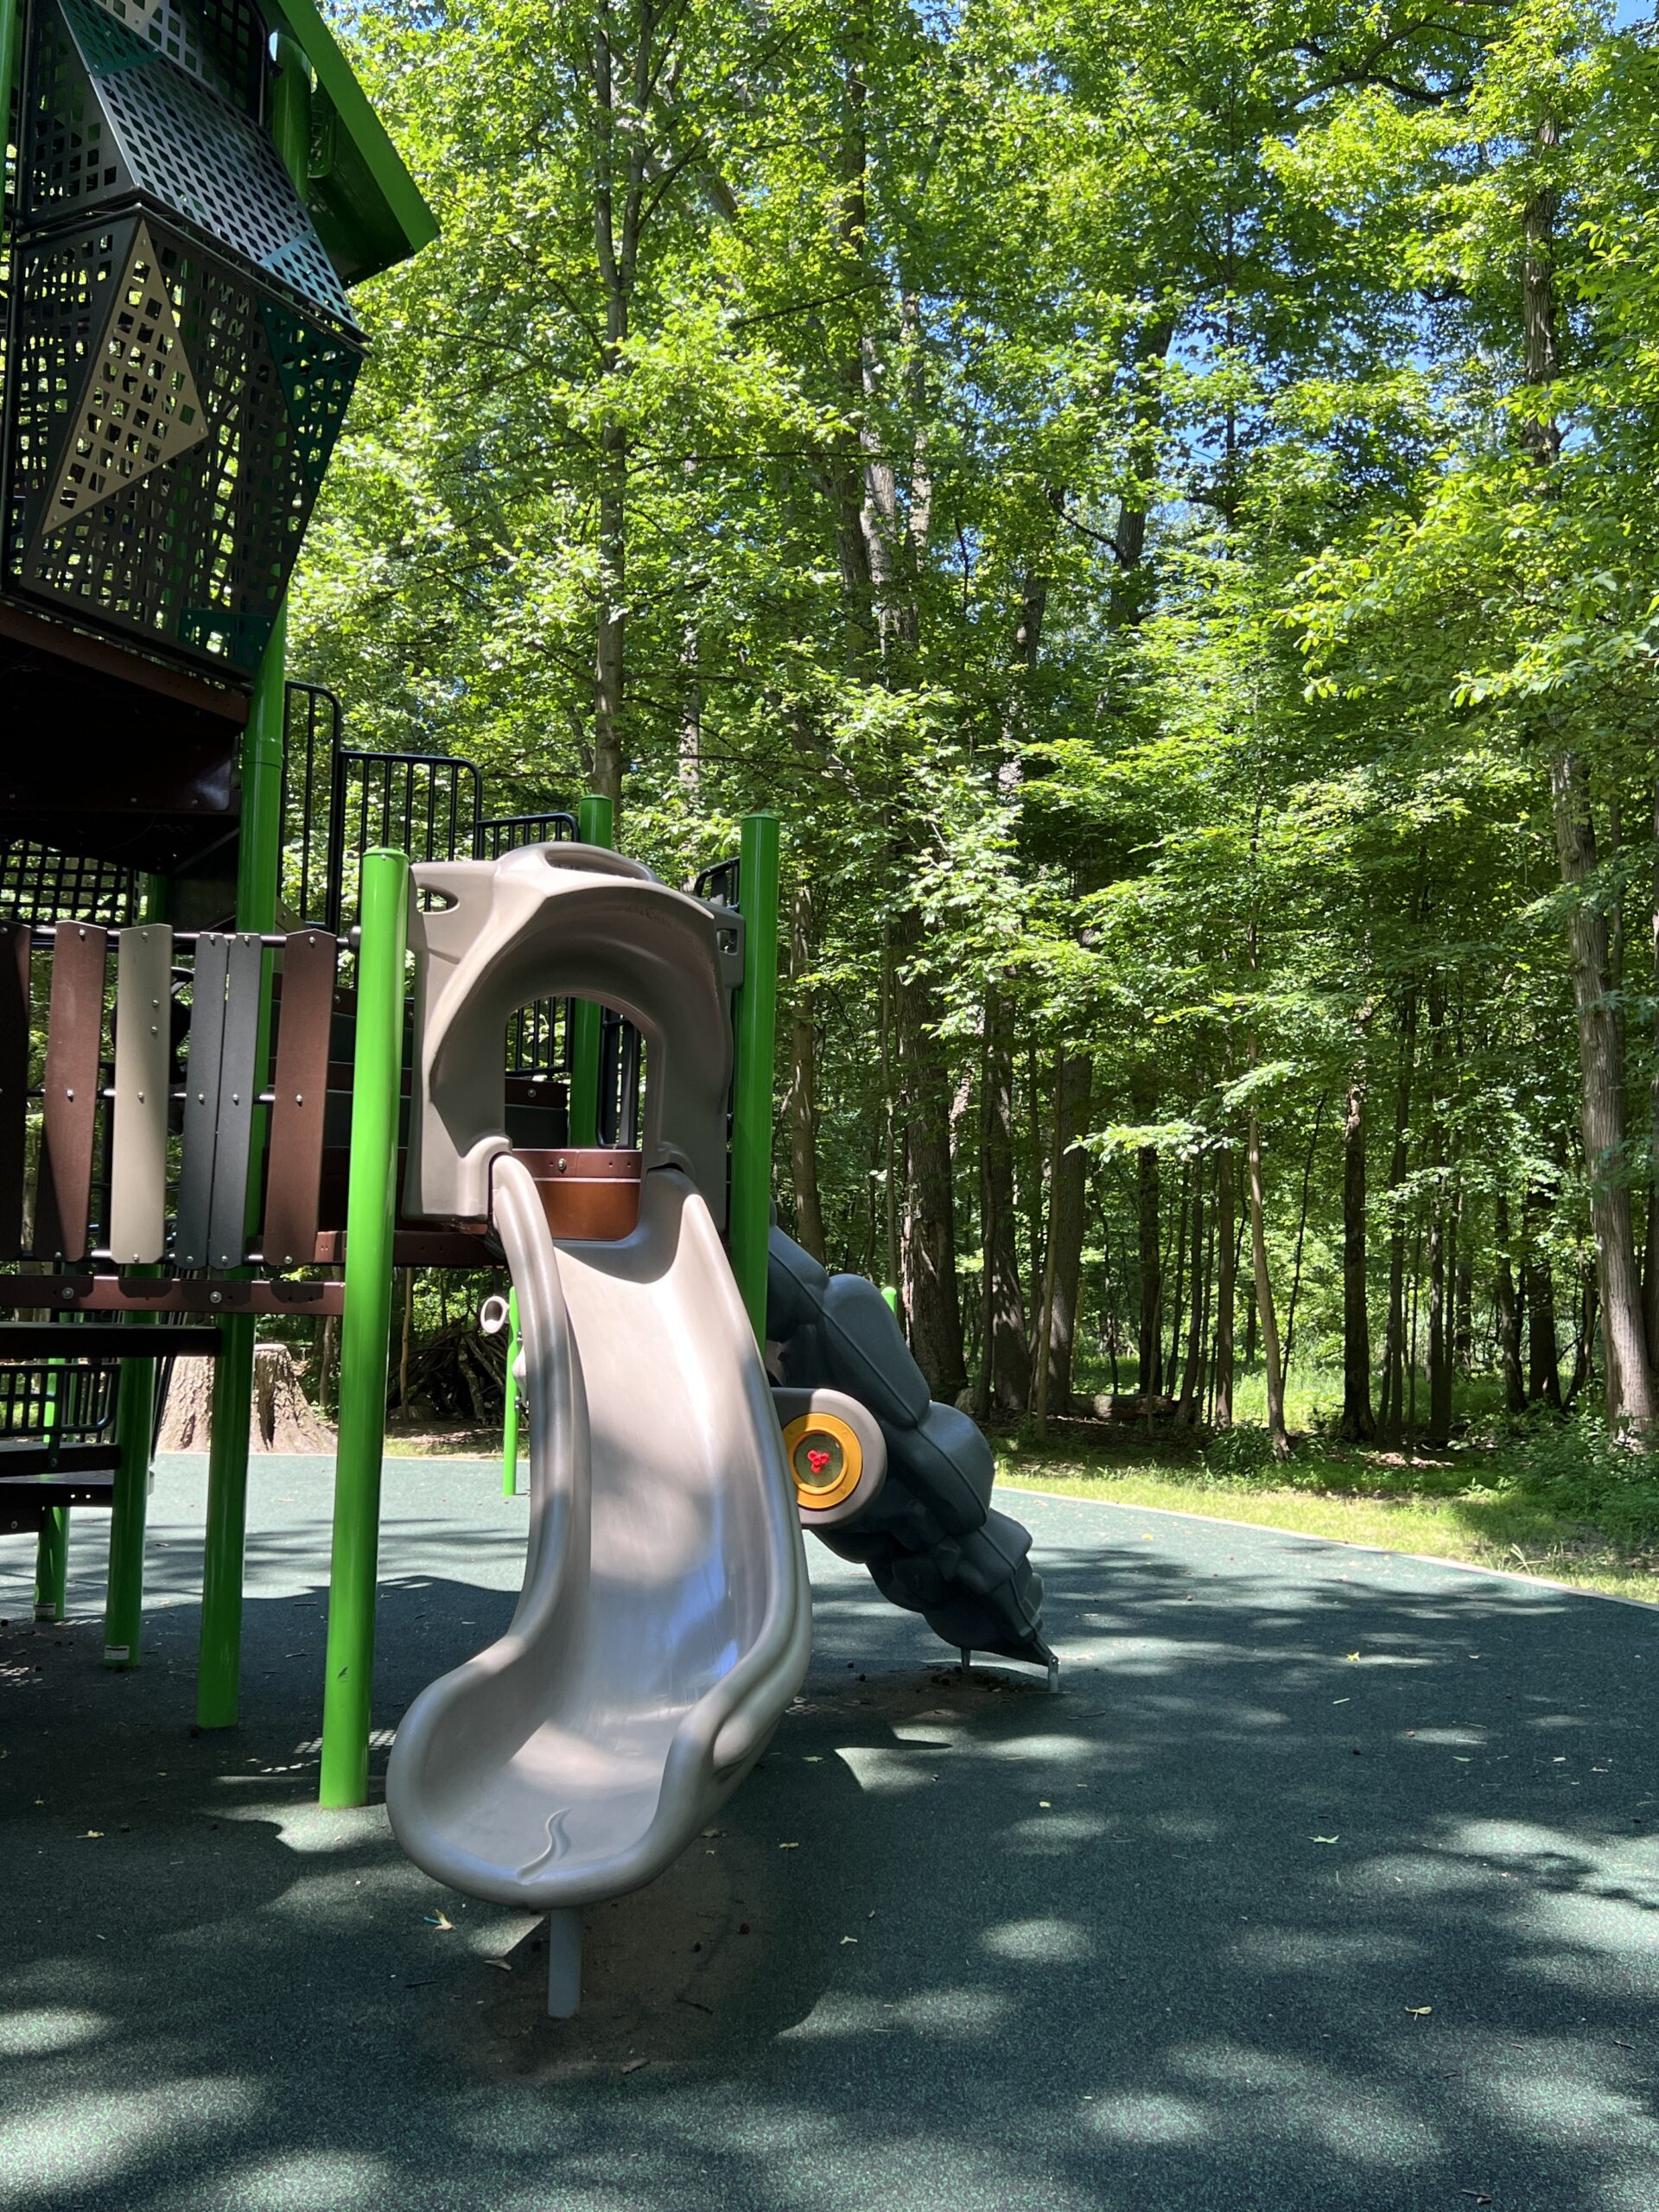 Nomahegan Park Playground in Cranford NJ - Large structure - SLIDE open straight slide